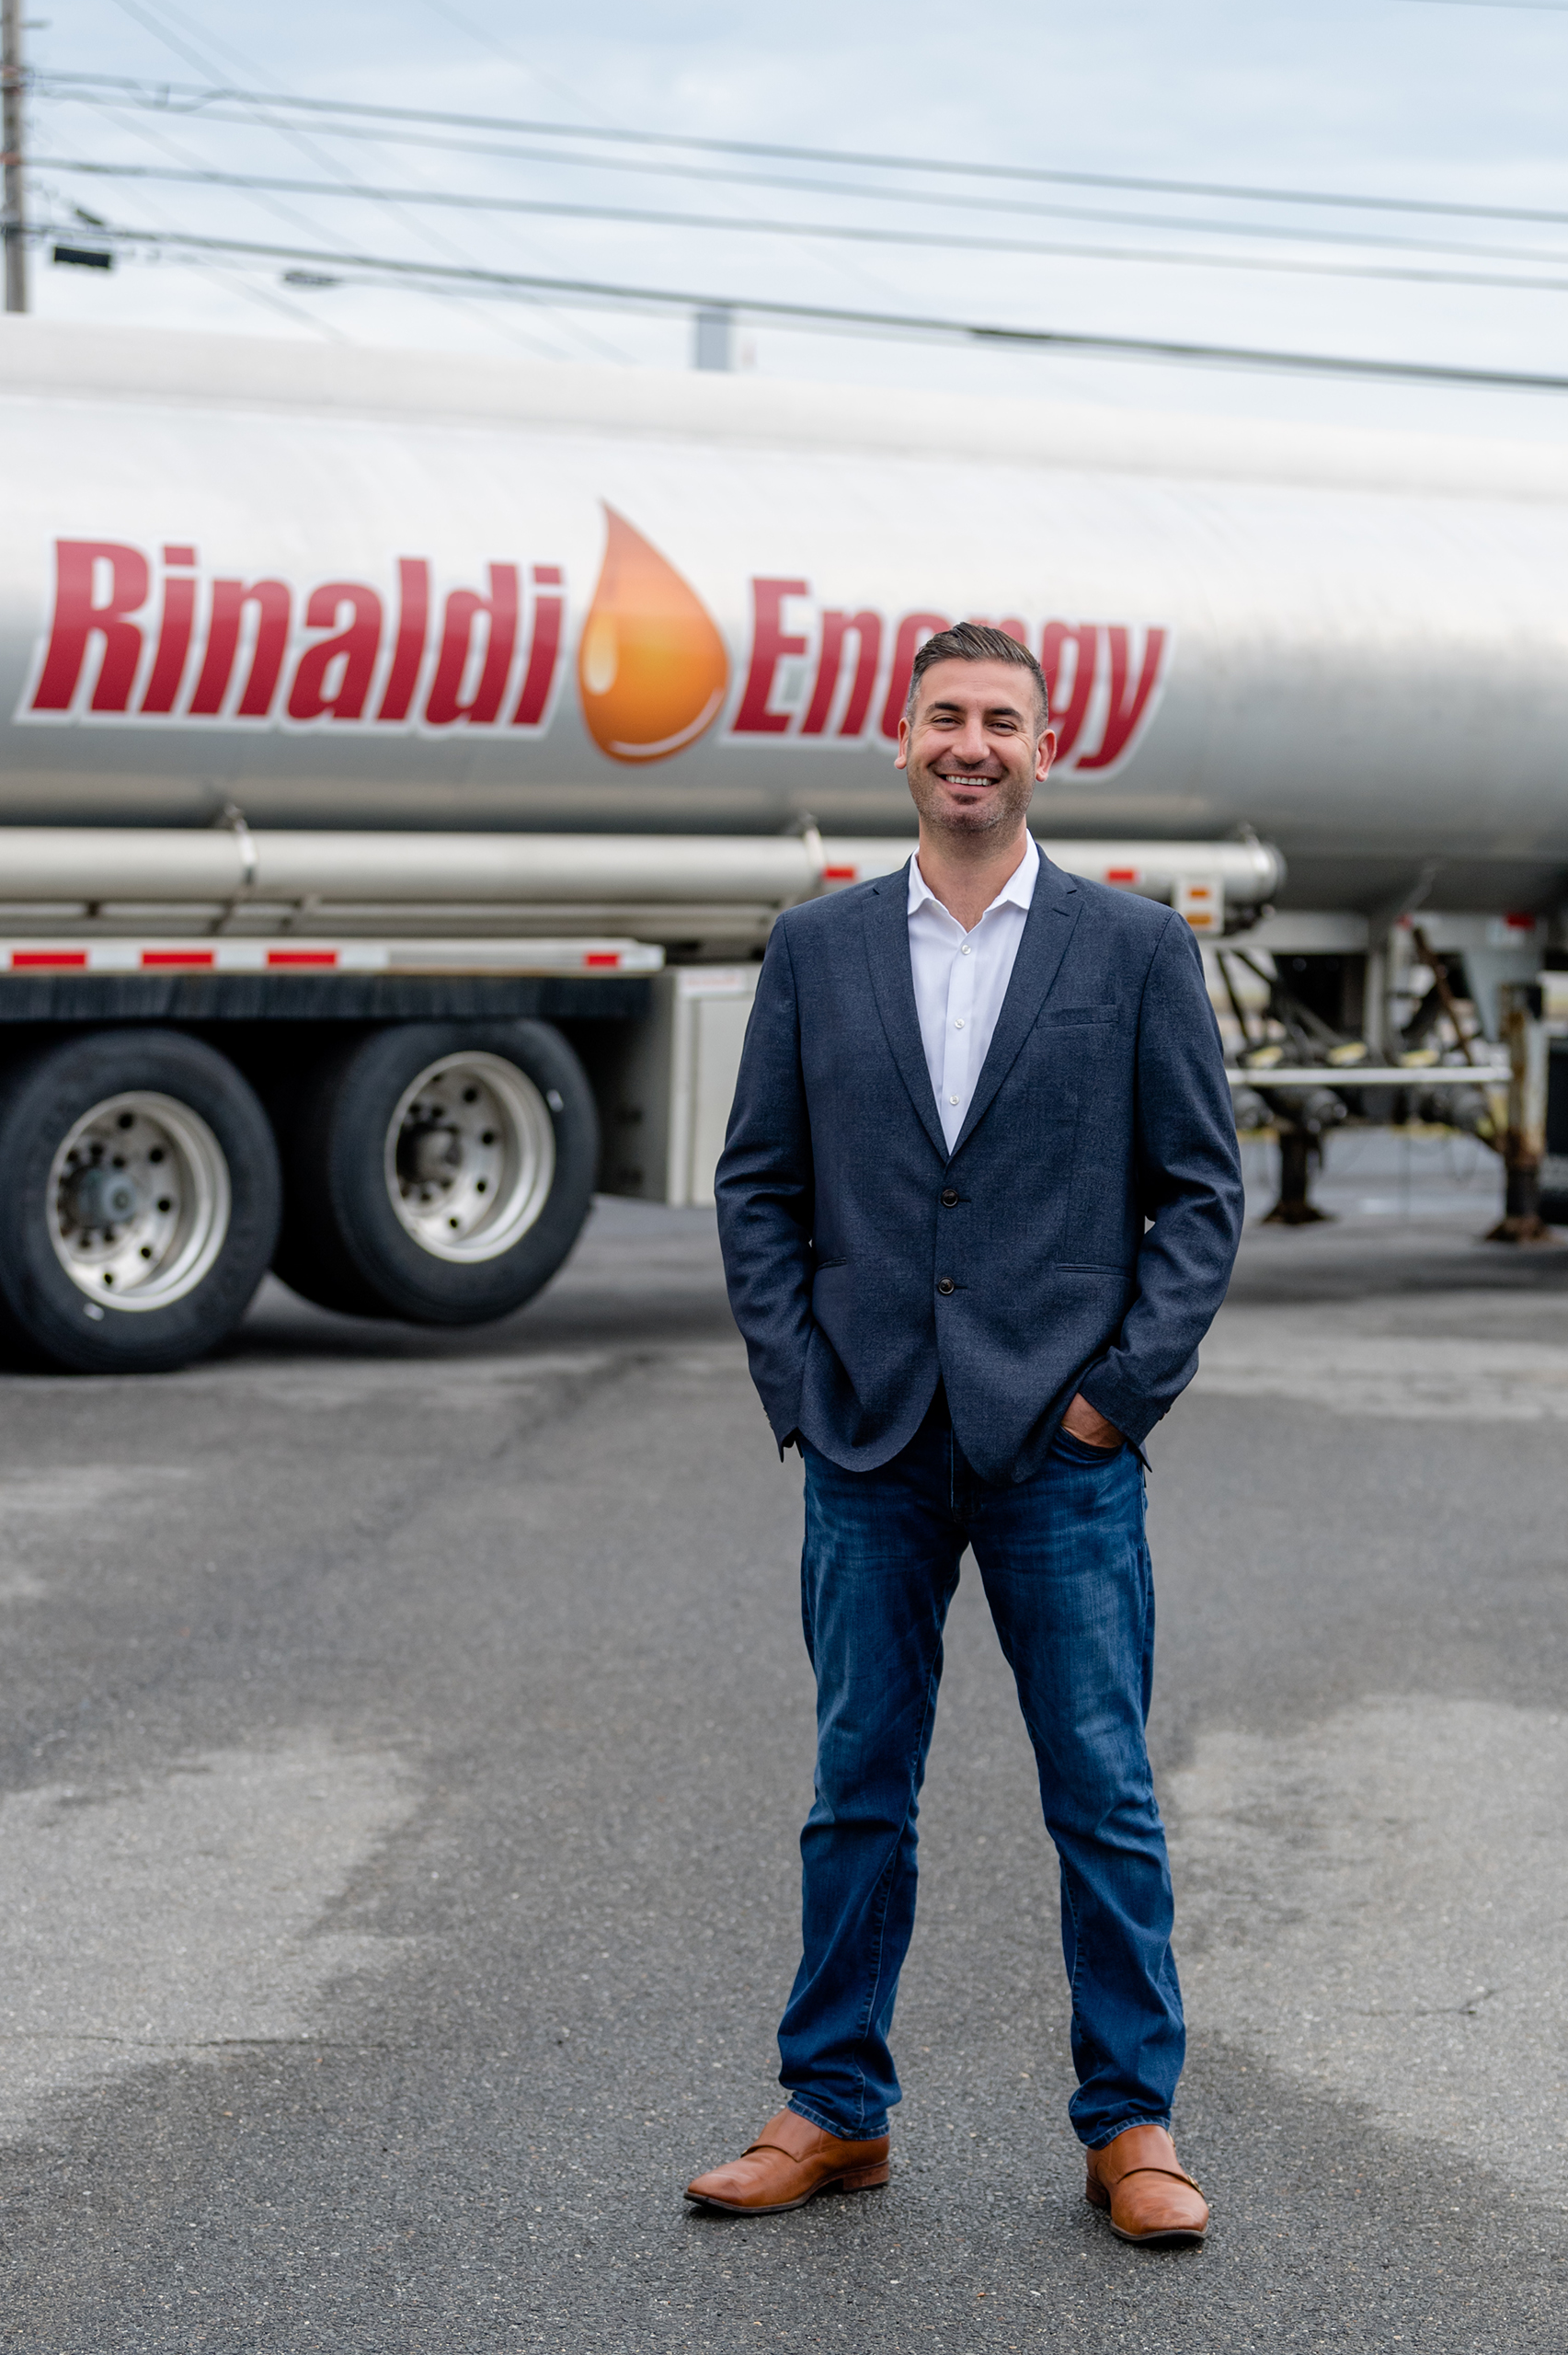 Rinaldi Energy Employee Photo